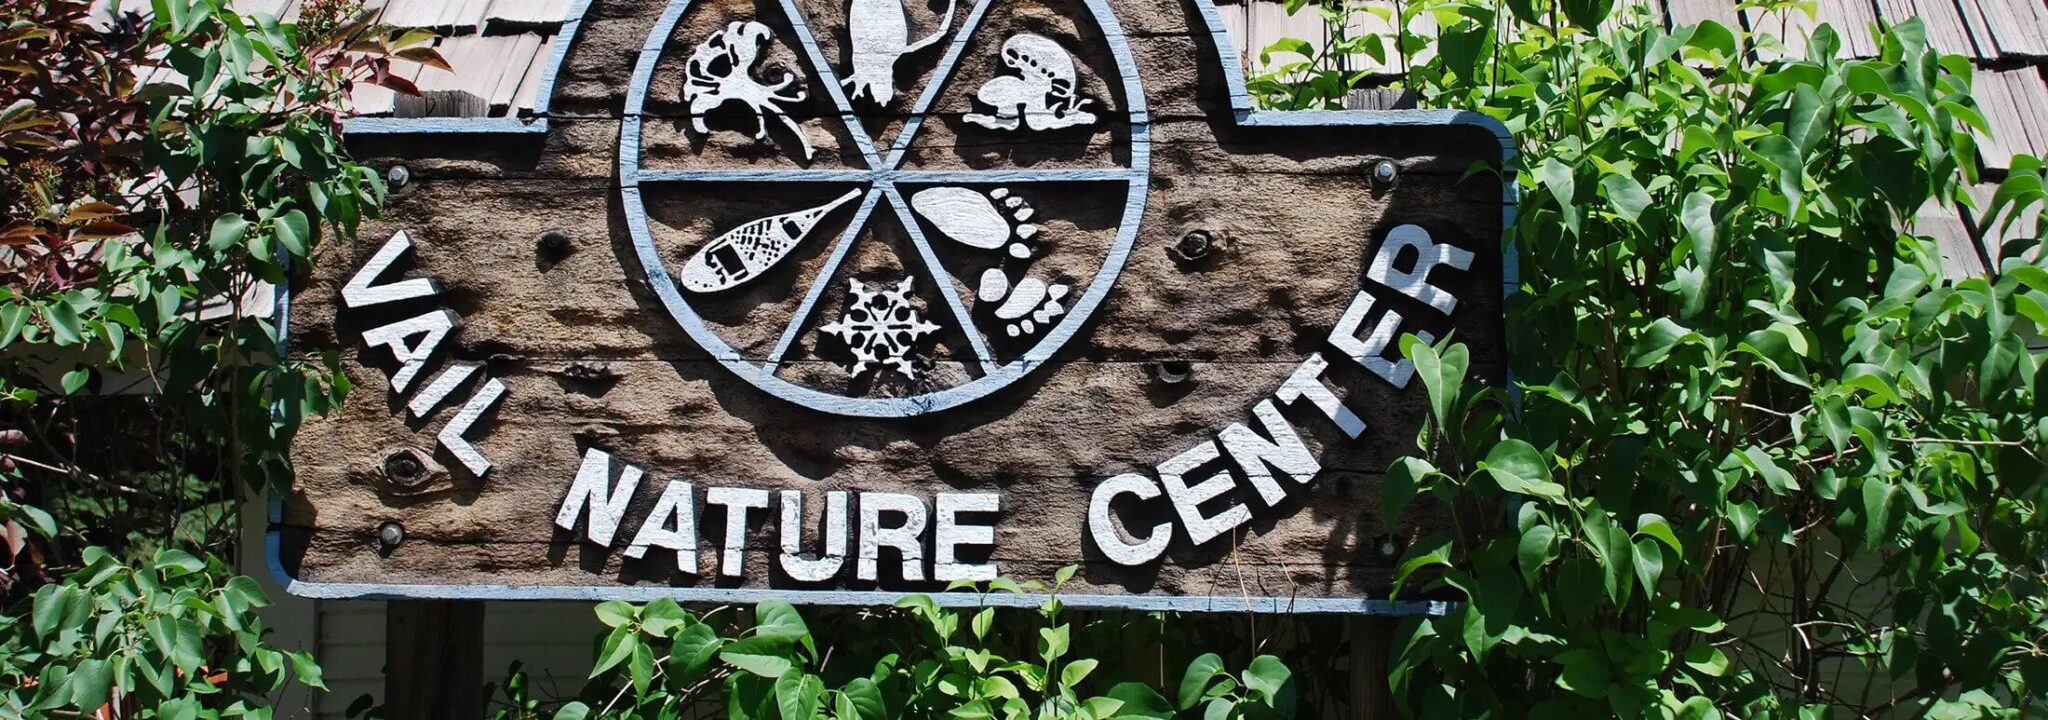 Vail Nature Center